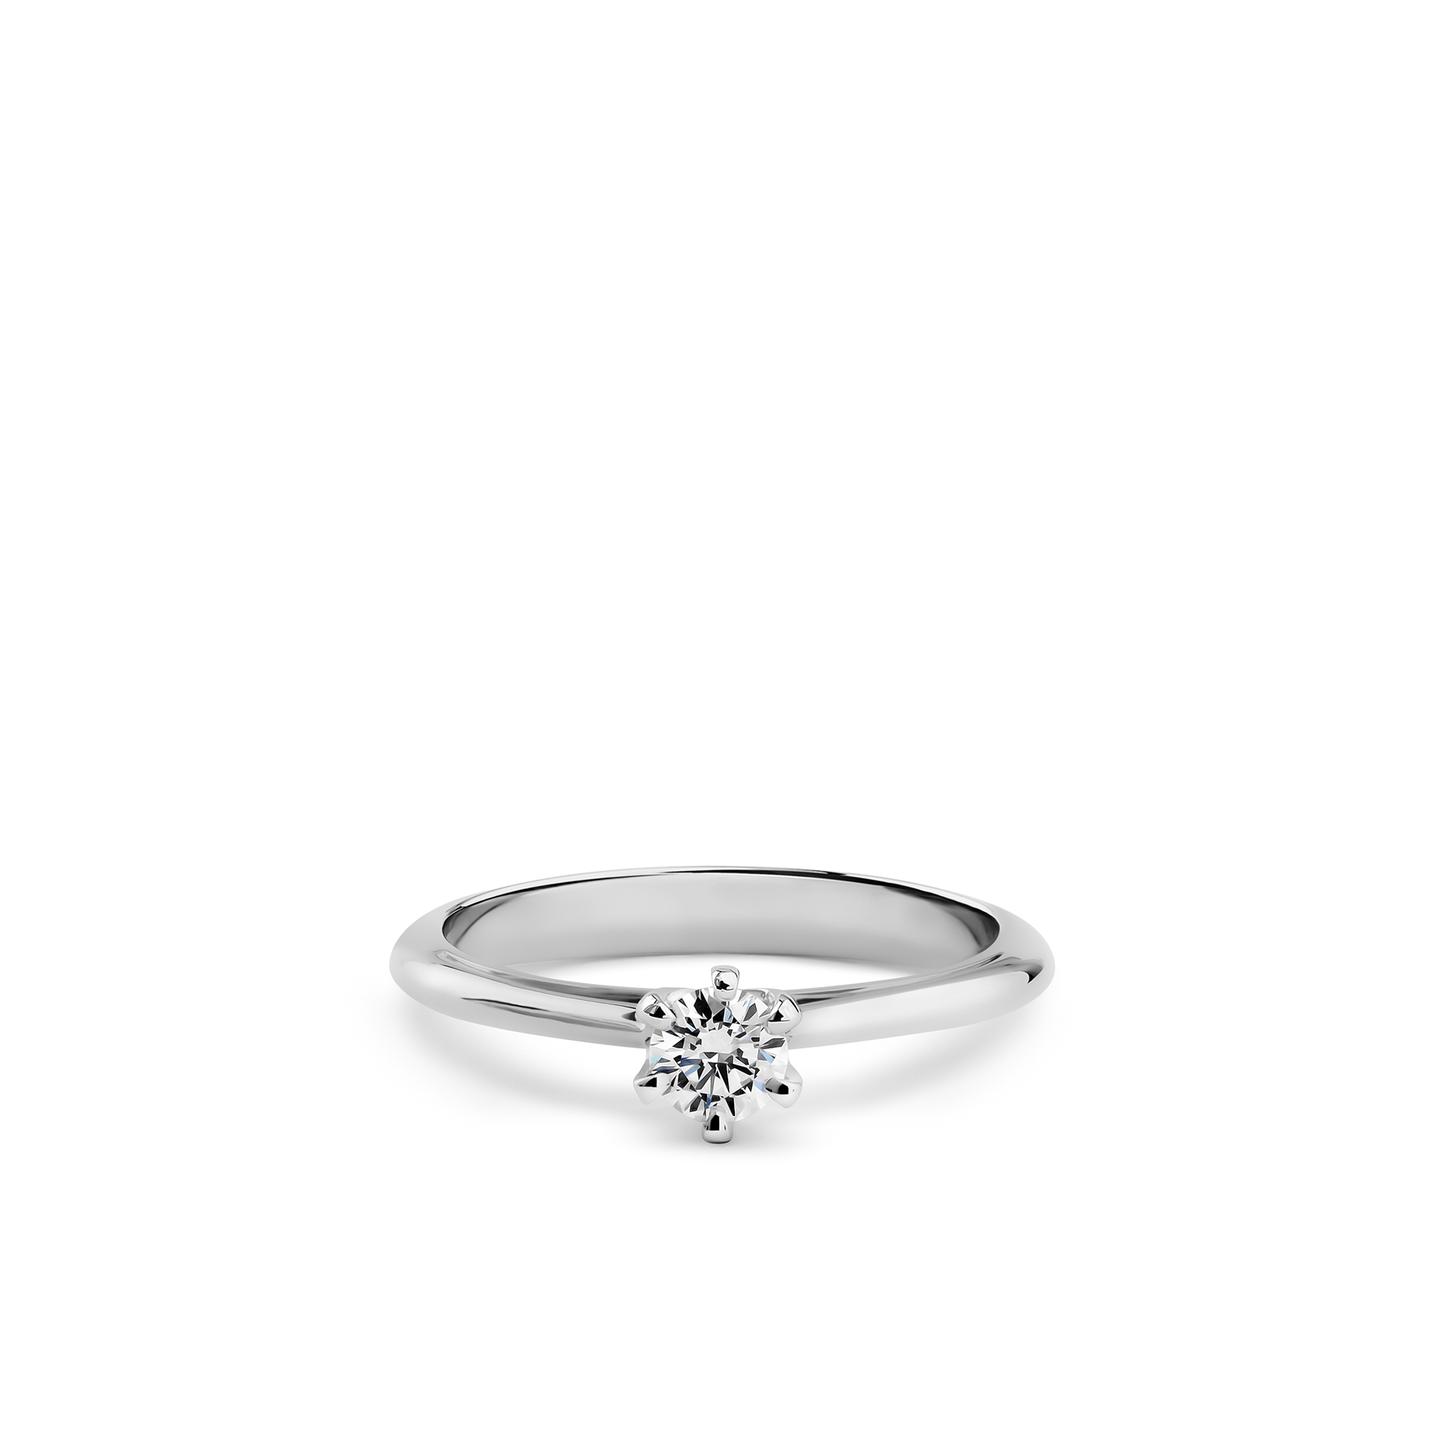 Oliver Heemeyer Bridge® Solitaire Diamond Ring. 0.26 carat